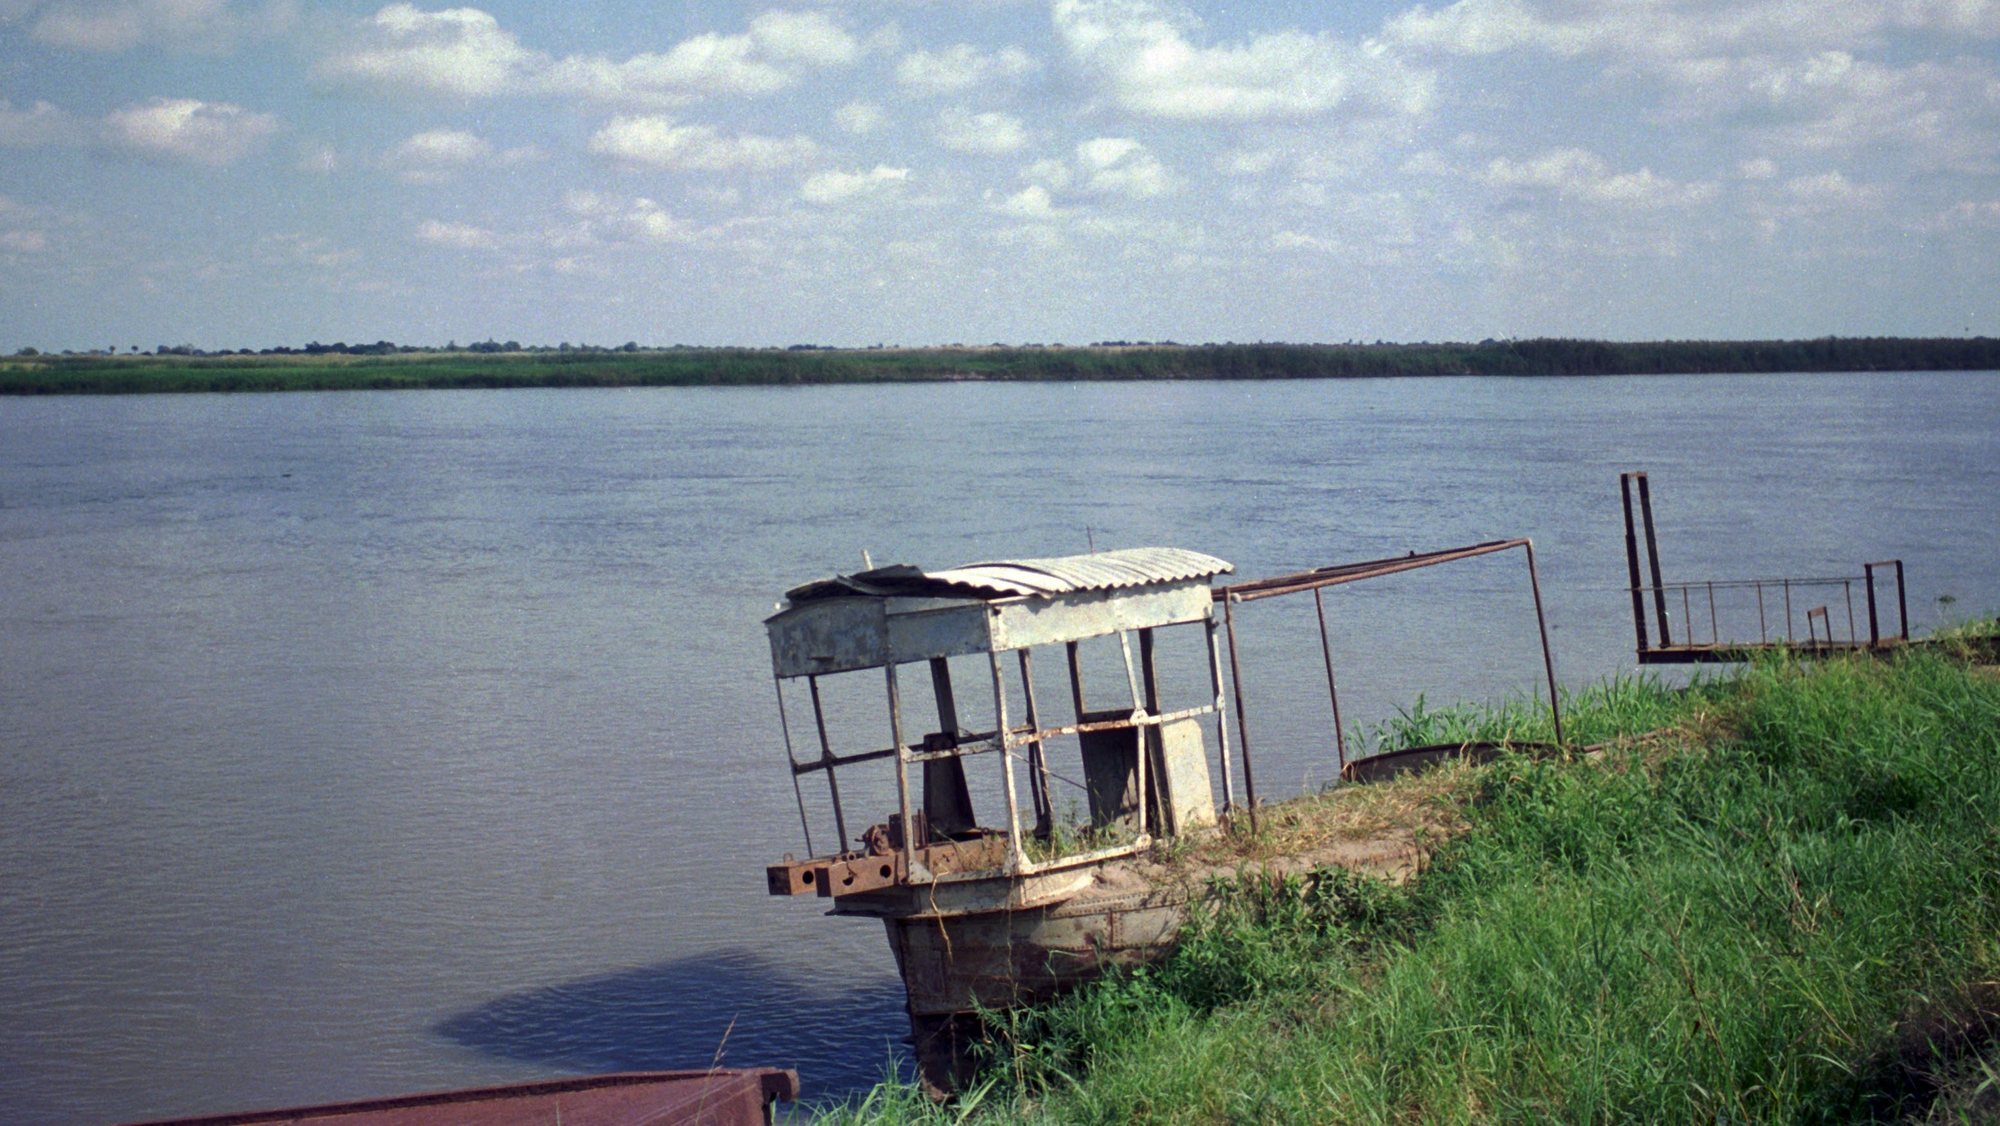 Rio Zambeze, Luabo, Moçambique, Maio de 1990.

Lusa